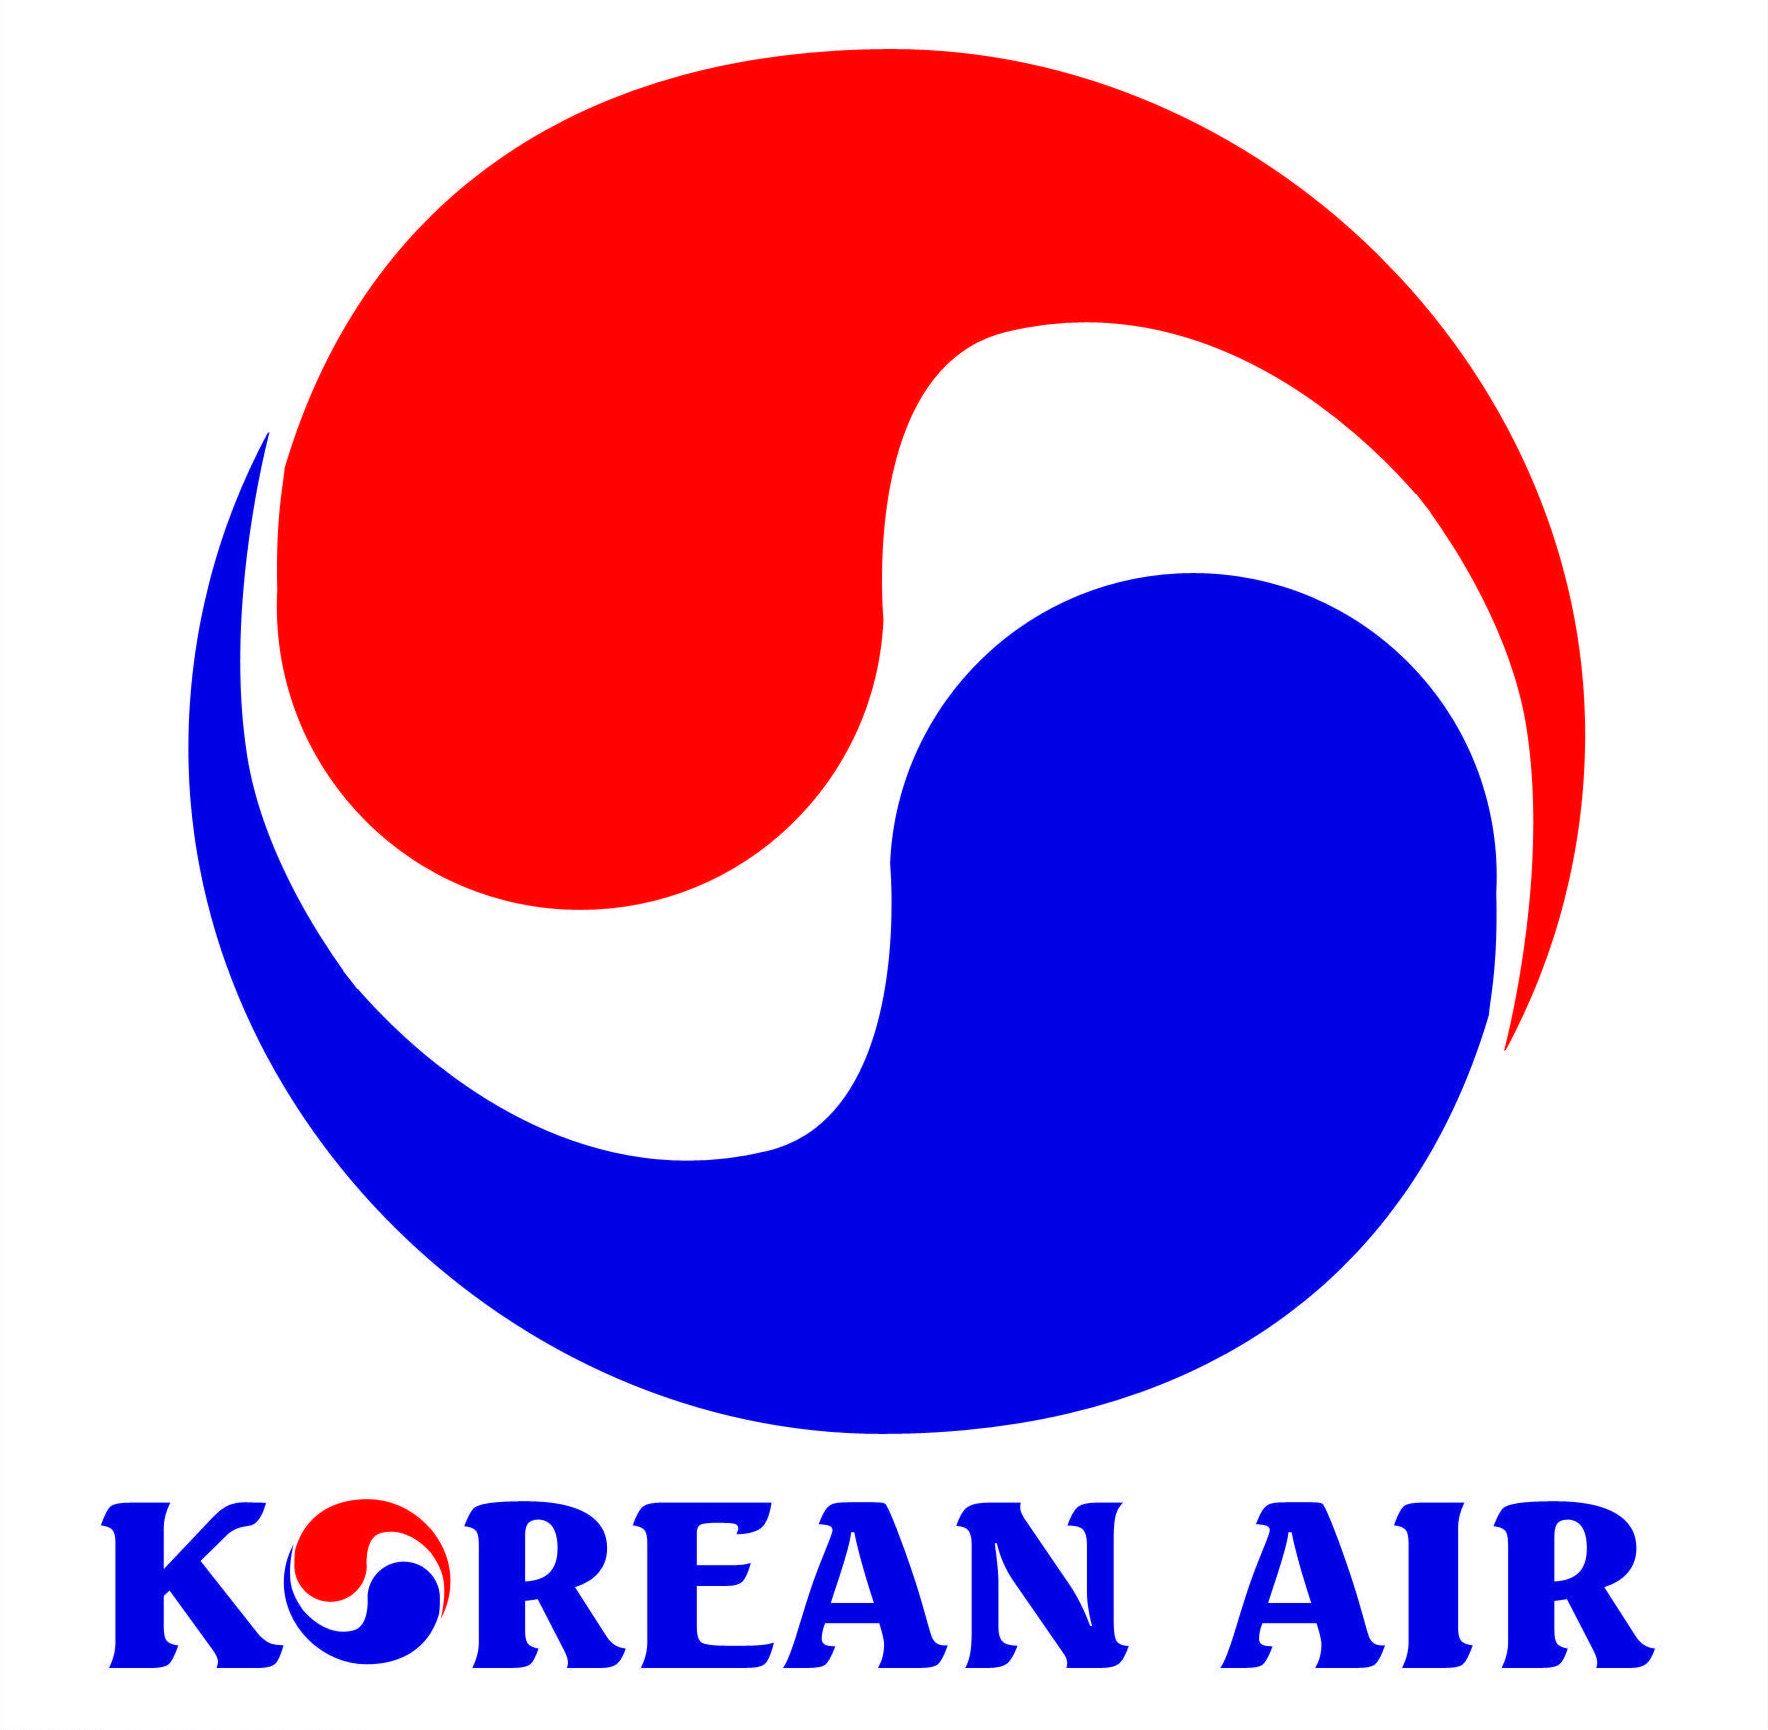 South Korea Company Logo - Branding Asia - Check Out These Designs